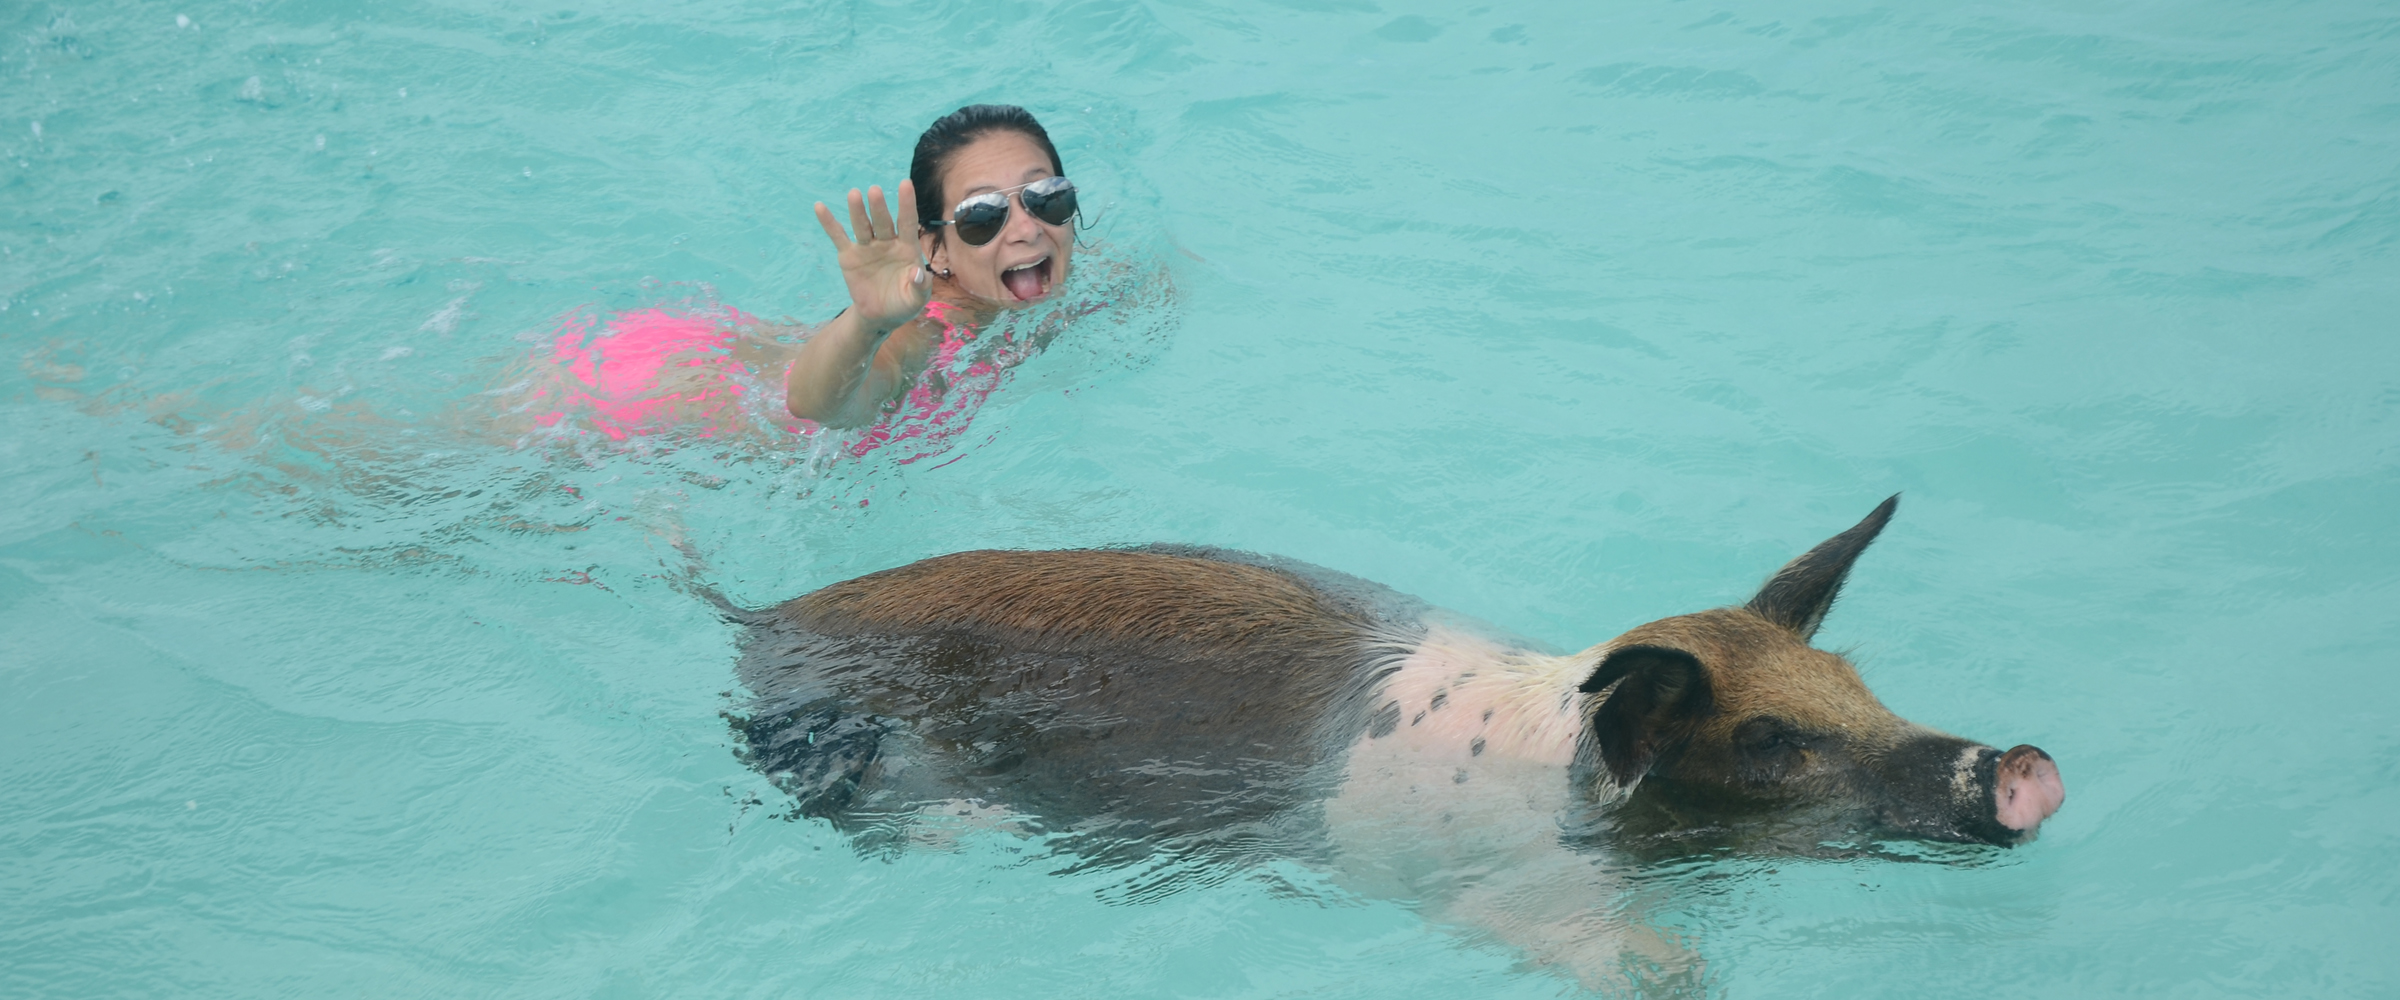 Swimming Pigs Tour in Bahamas